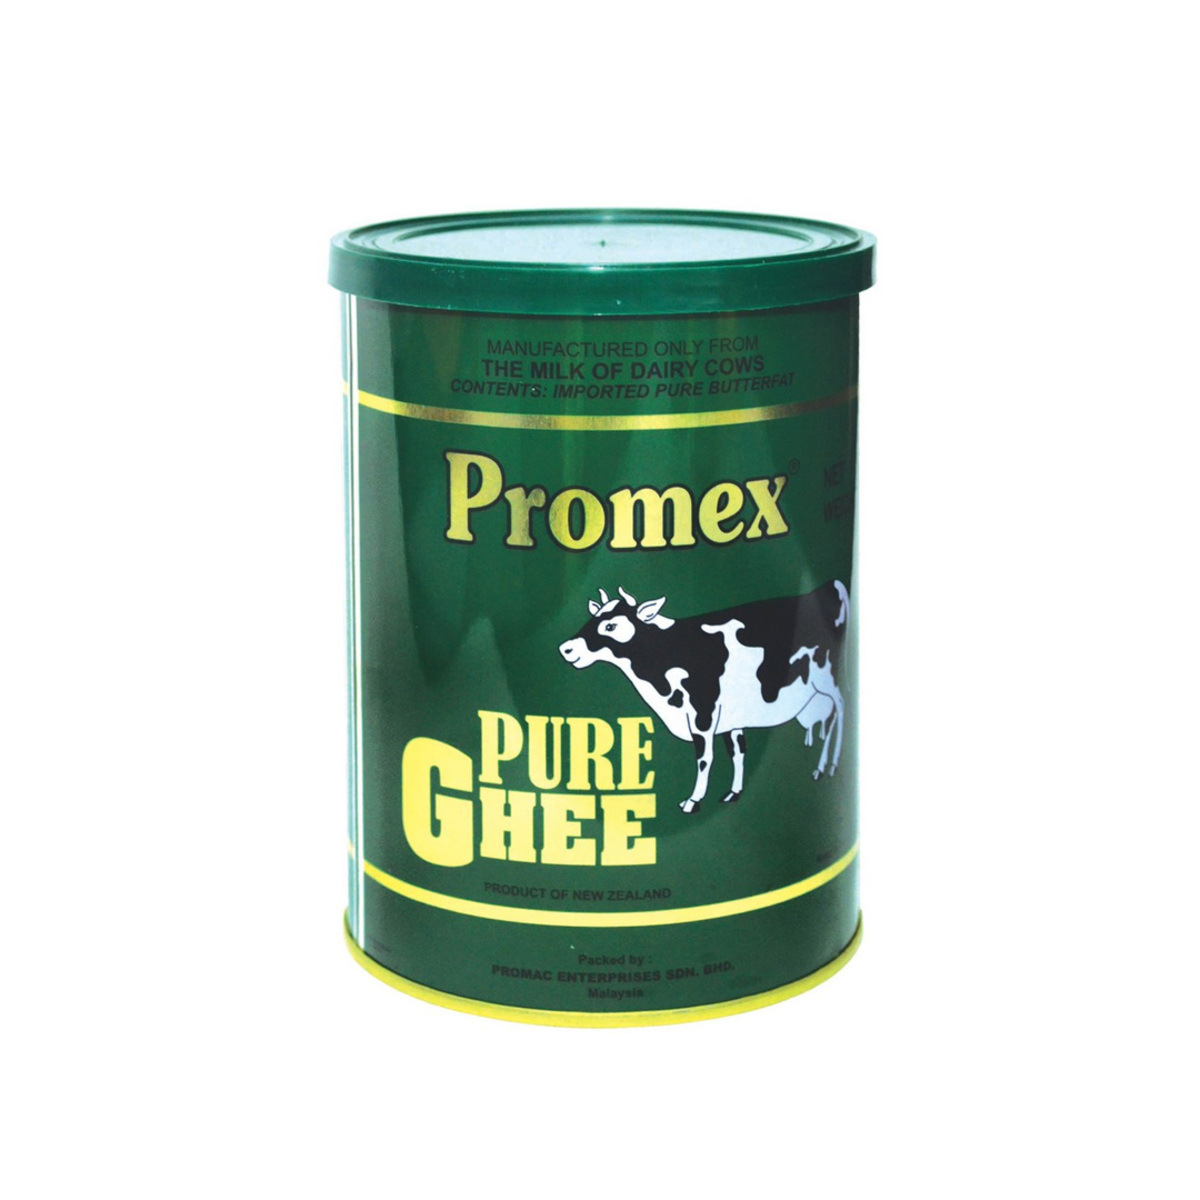 Promex Pure Ghee 800g